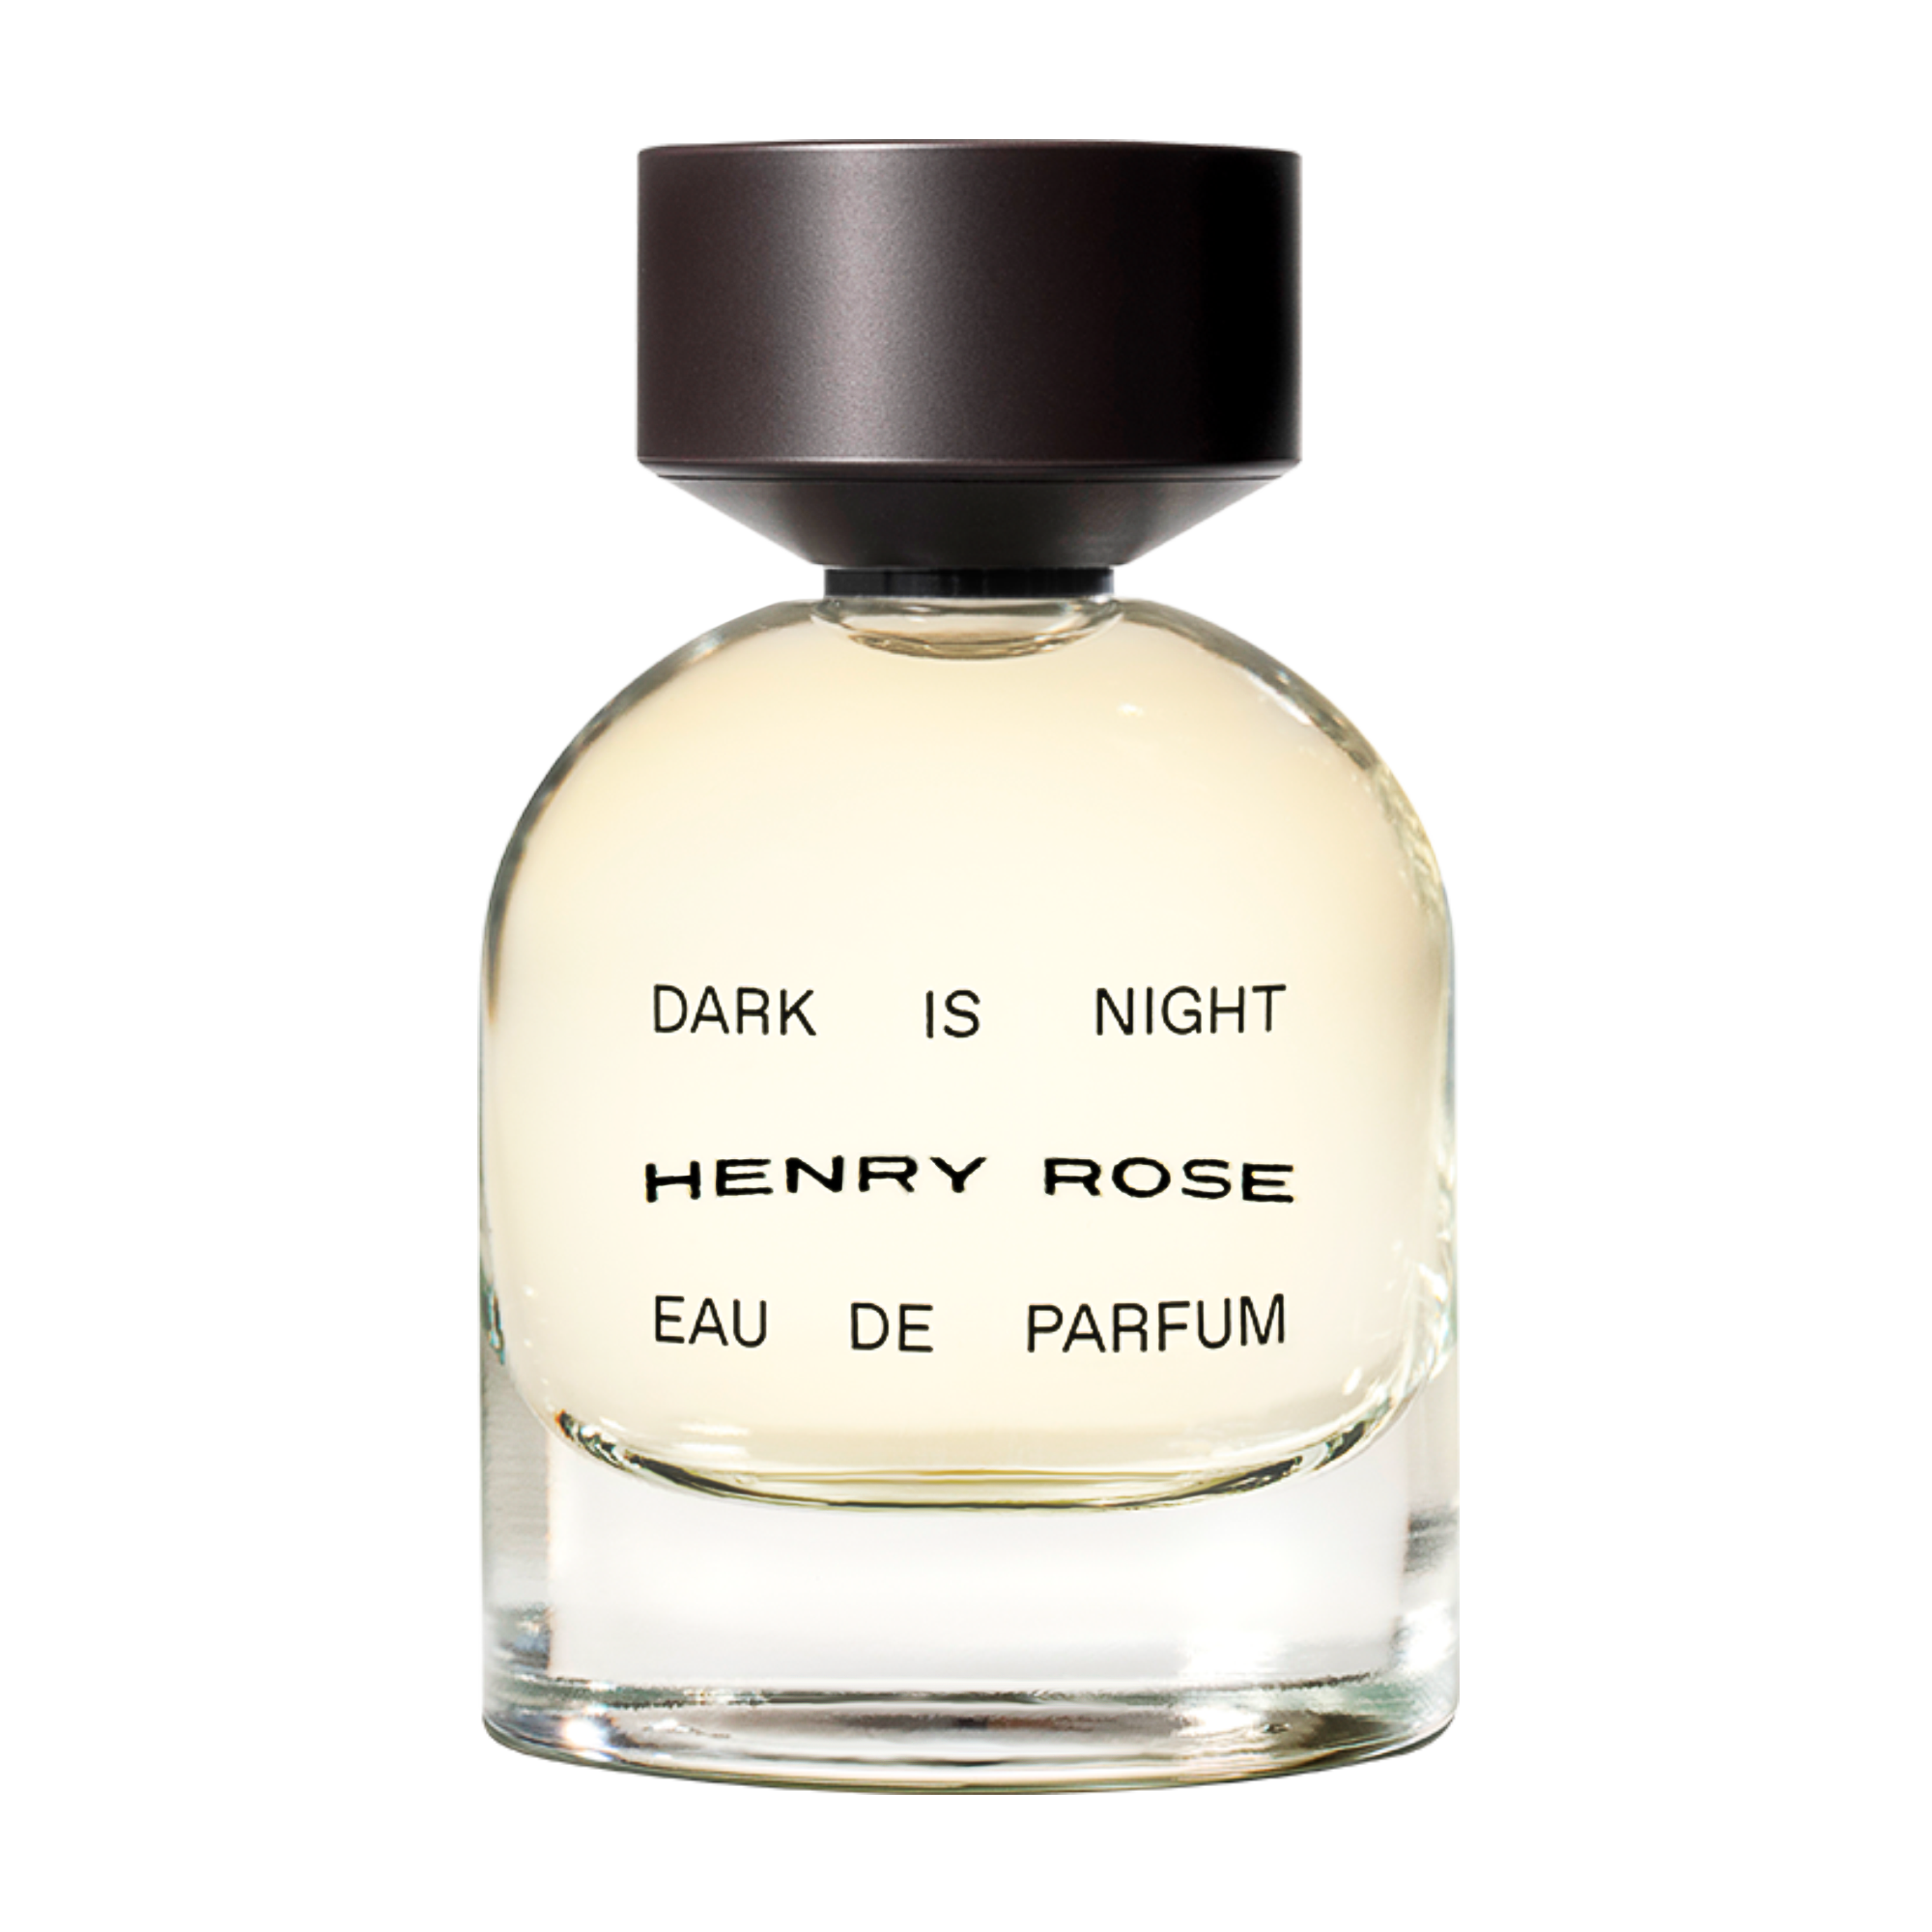 Henry Rose Dark Is Night Eau de Parfum, 1.7 oz